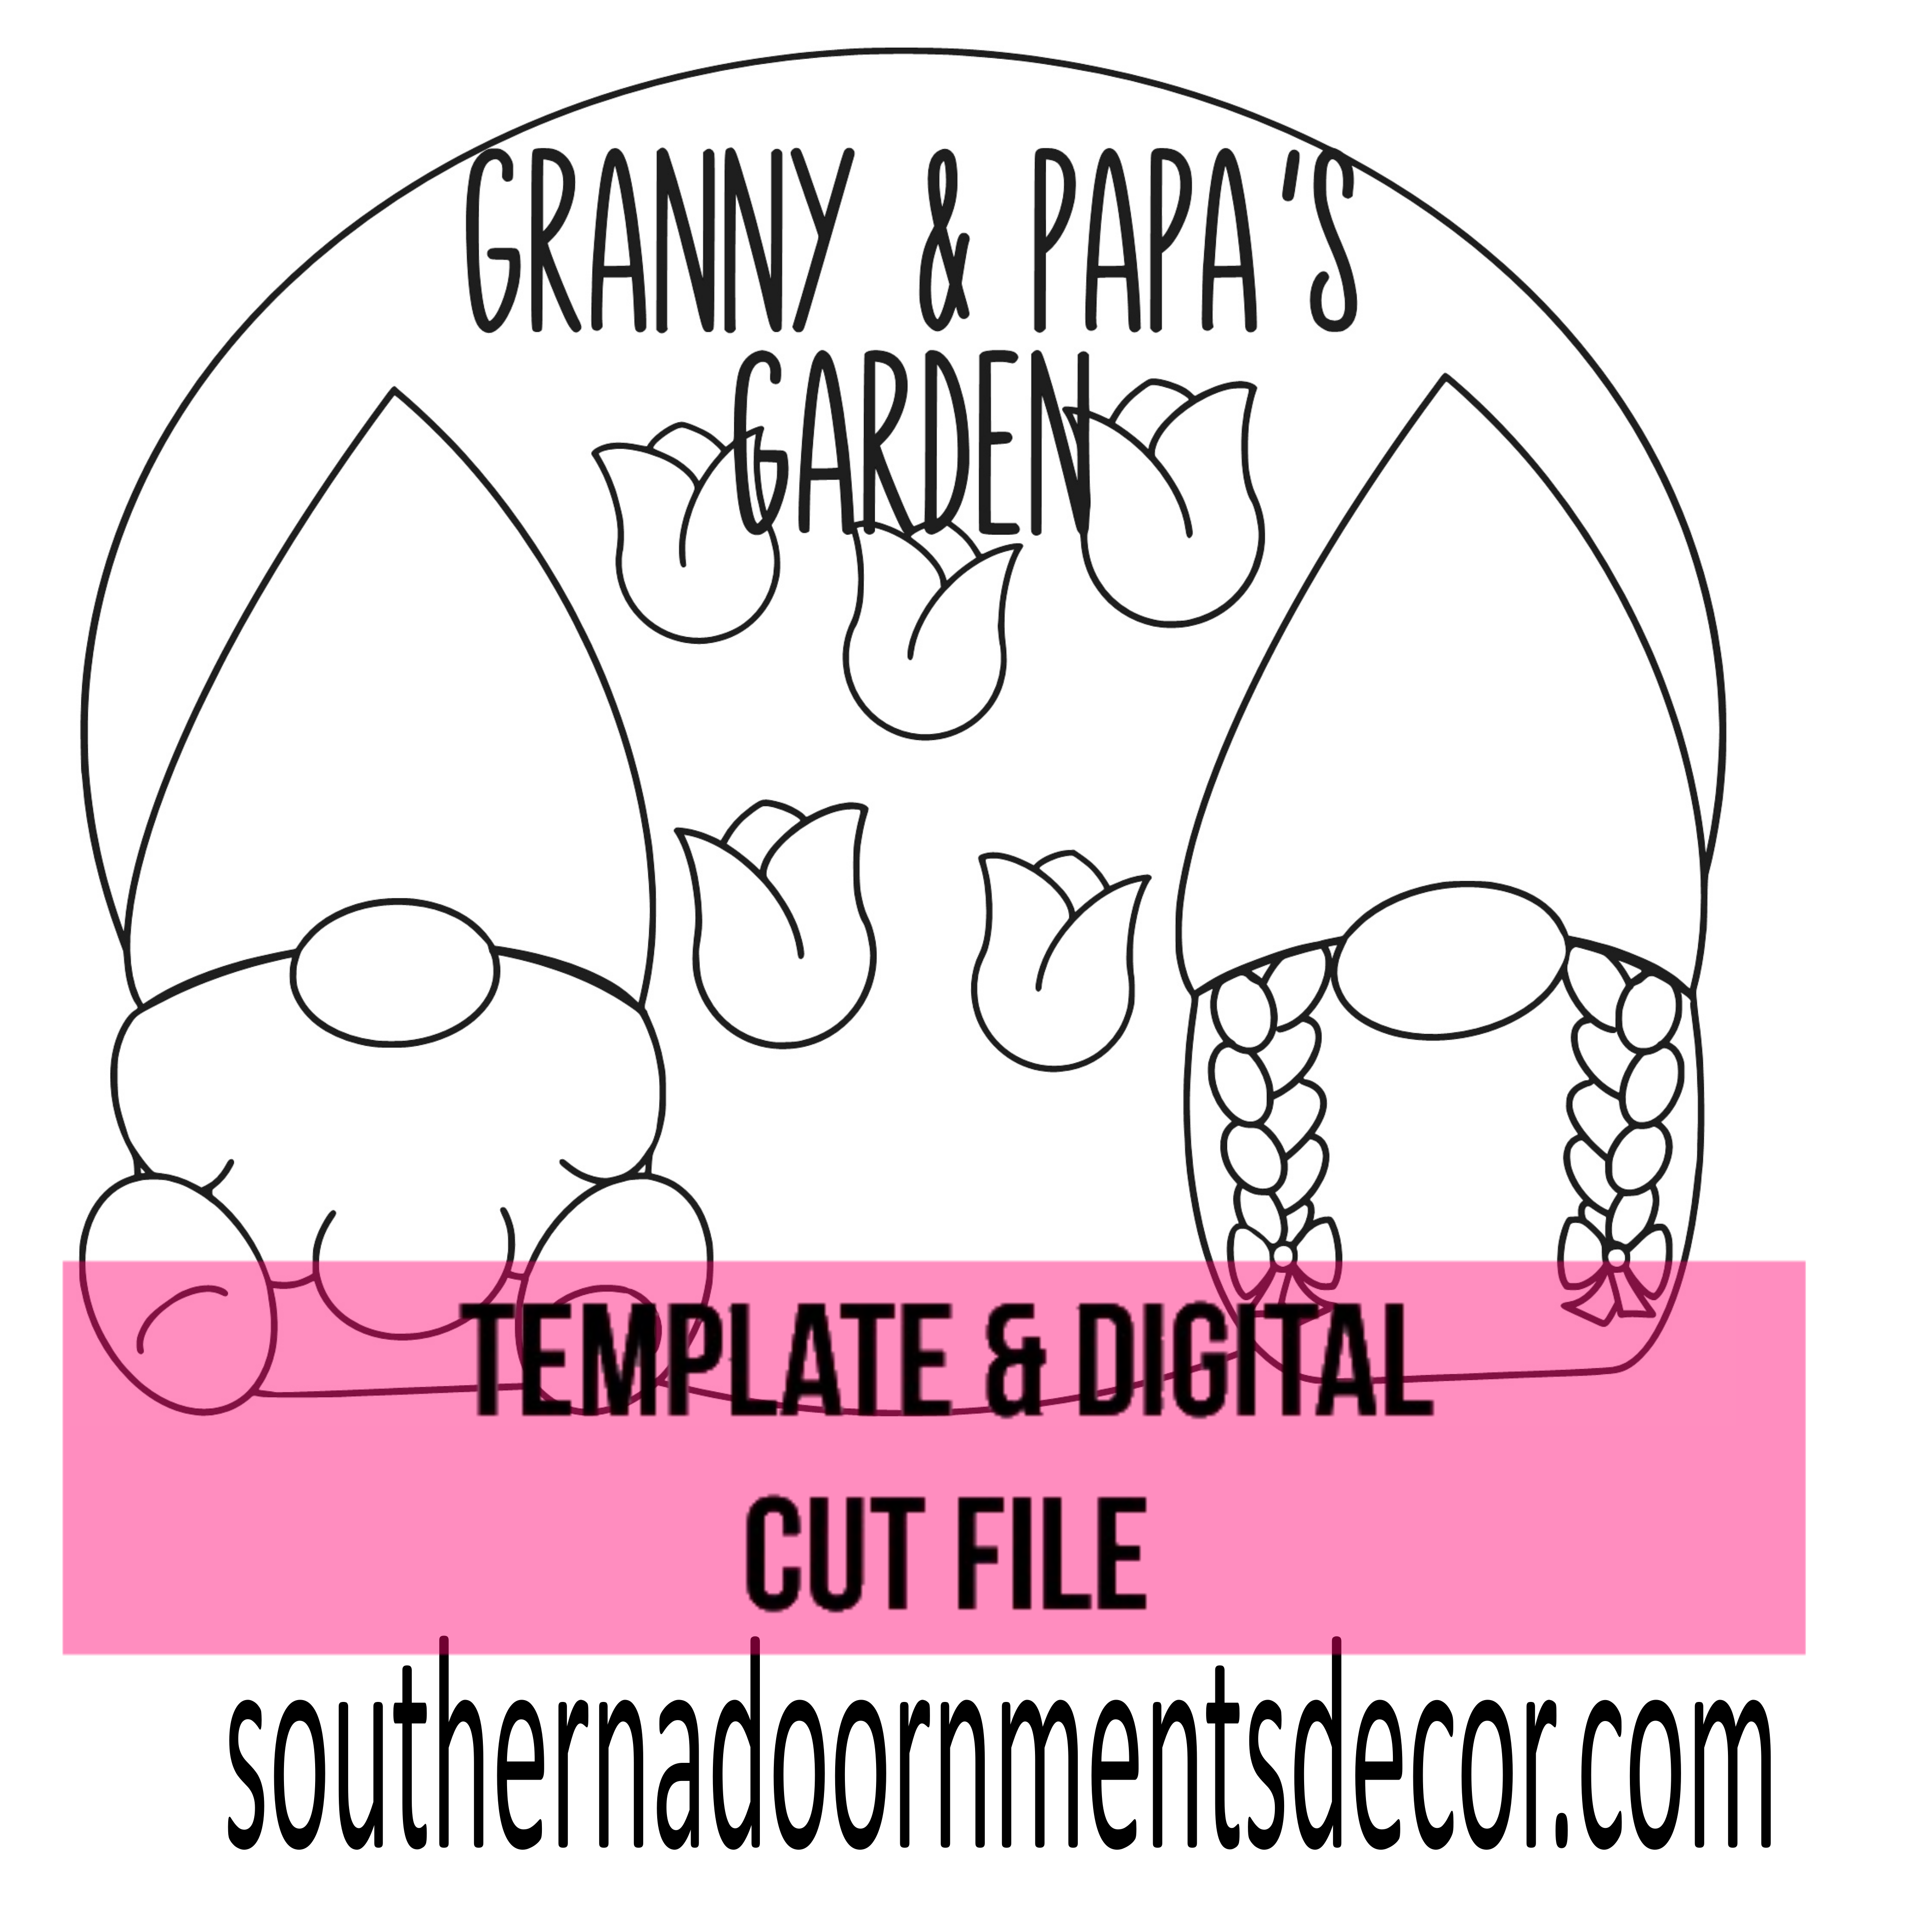 Granny and Papas Template & Digital Cut File